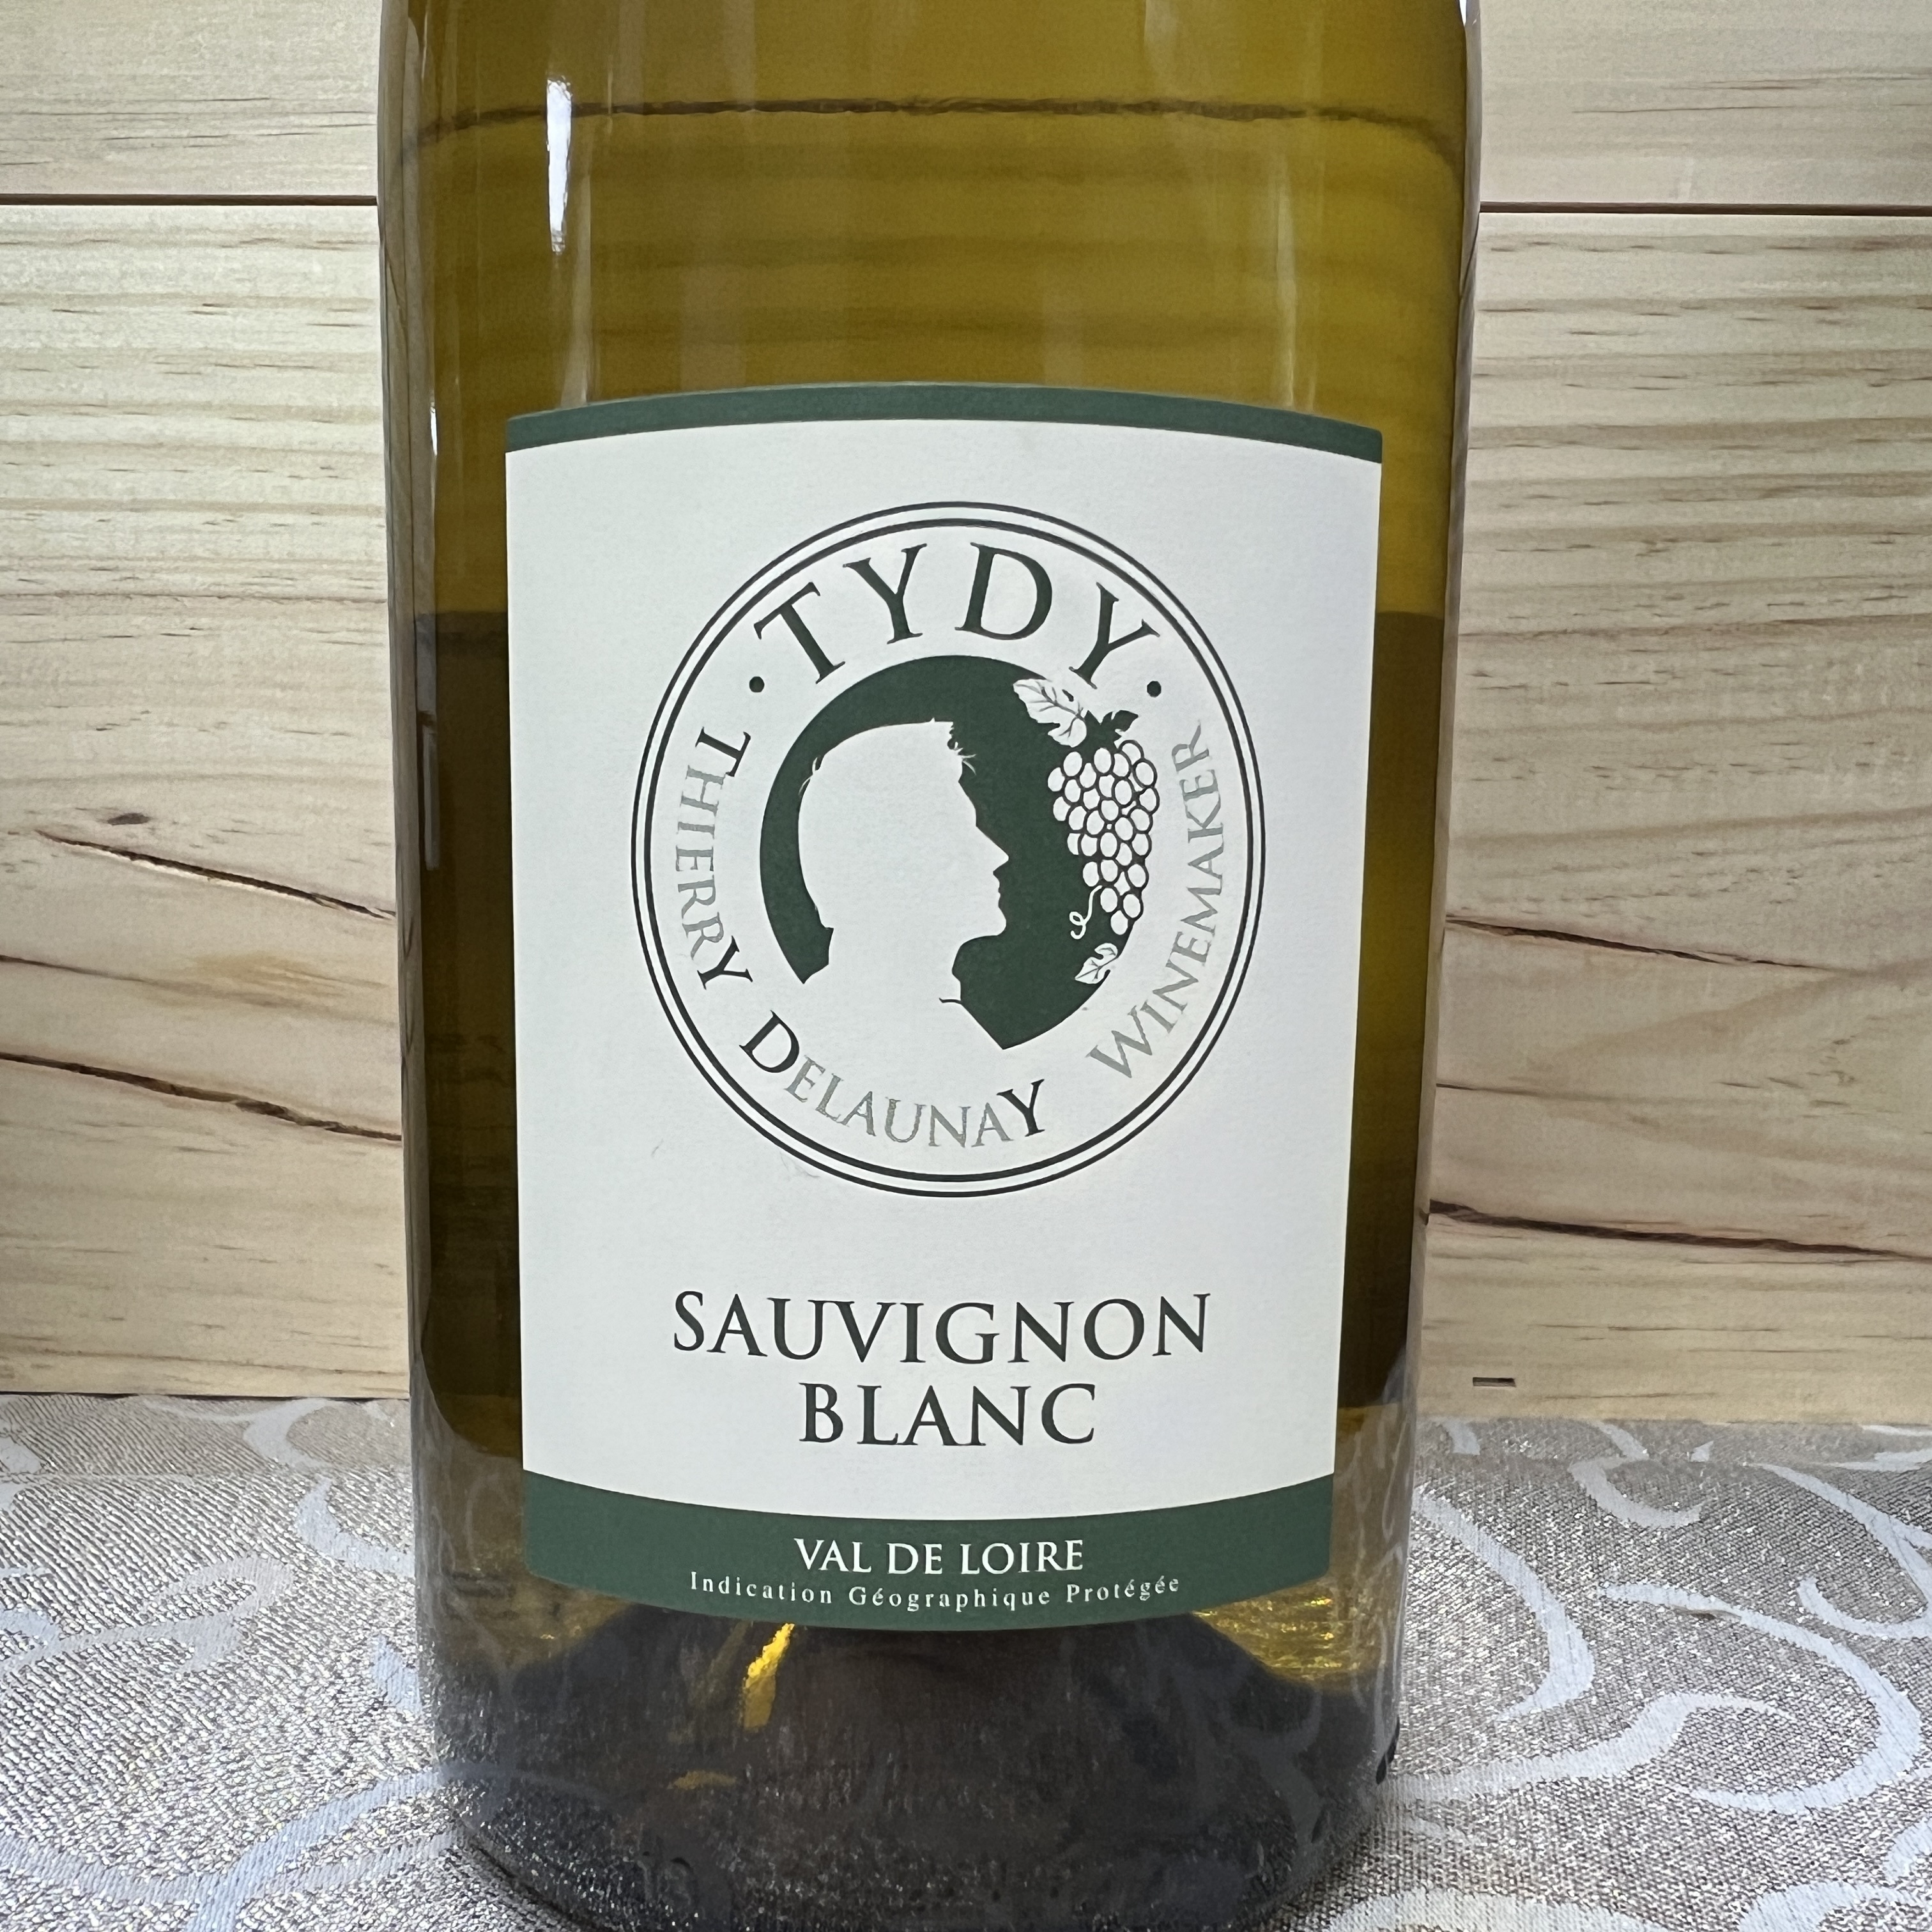 Thiery Delaunay 'TYDY' Sauvignon Blanc 2021